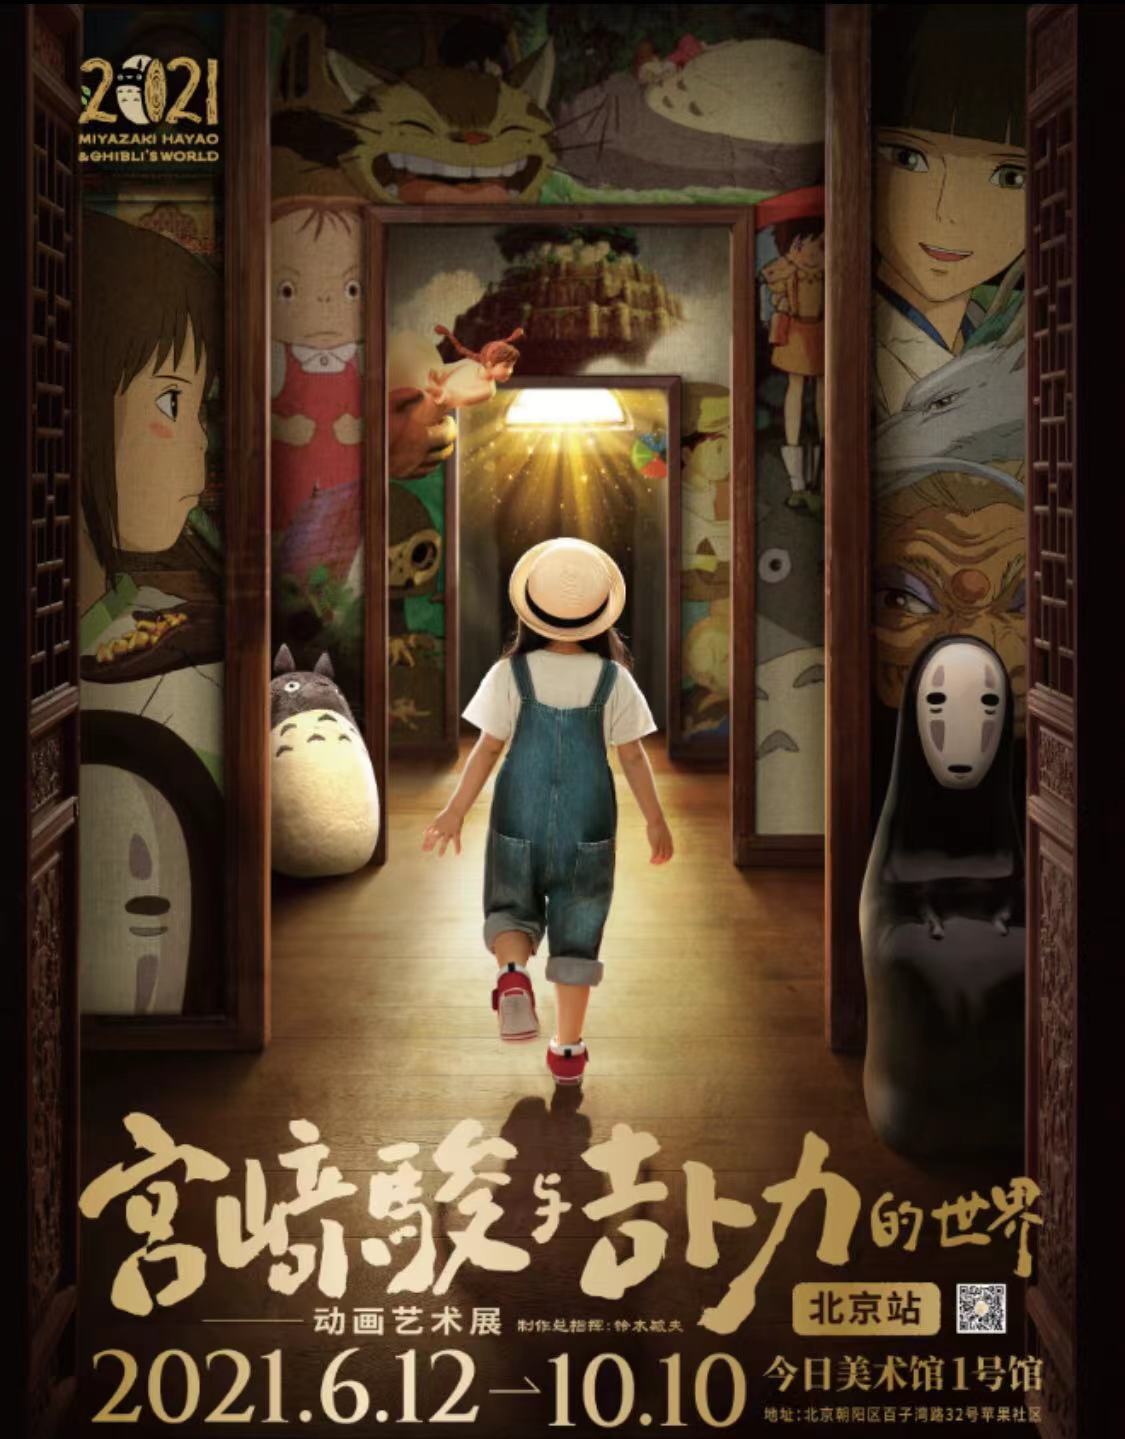 Miyazaki Hayao and Ghibli's World Animation Art Exhibition | the Beijinger